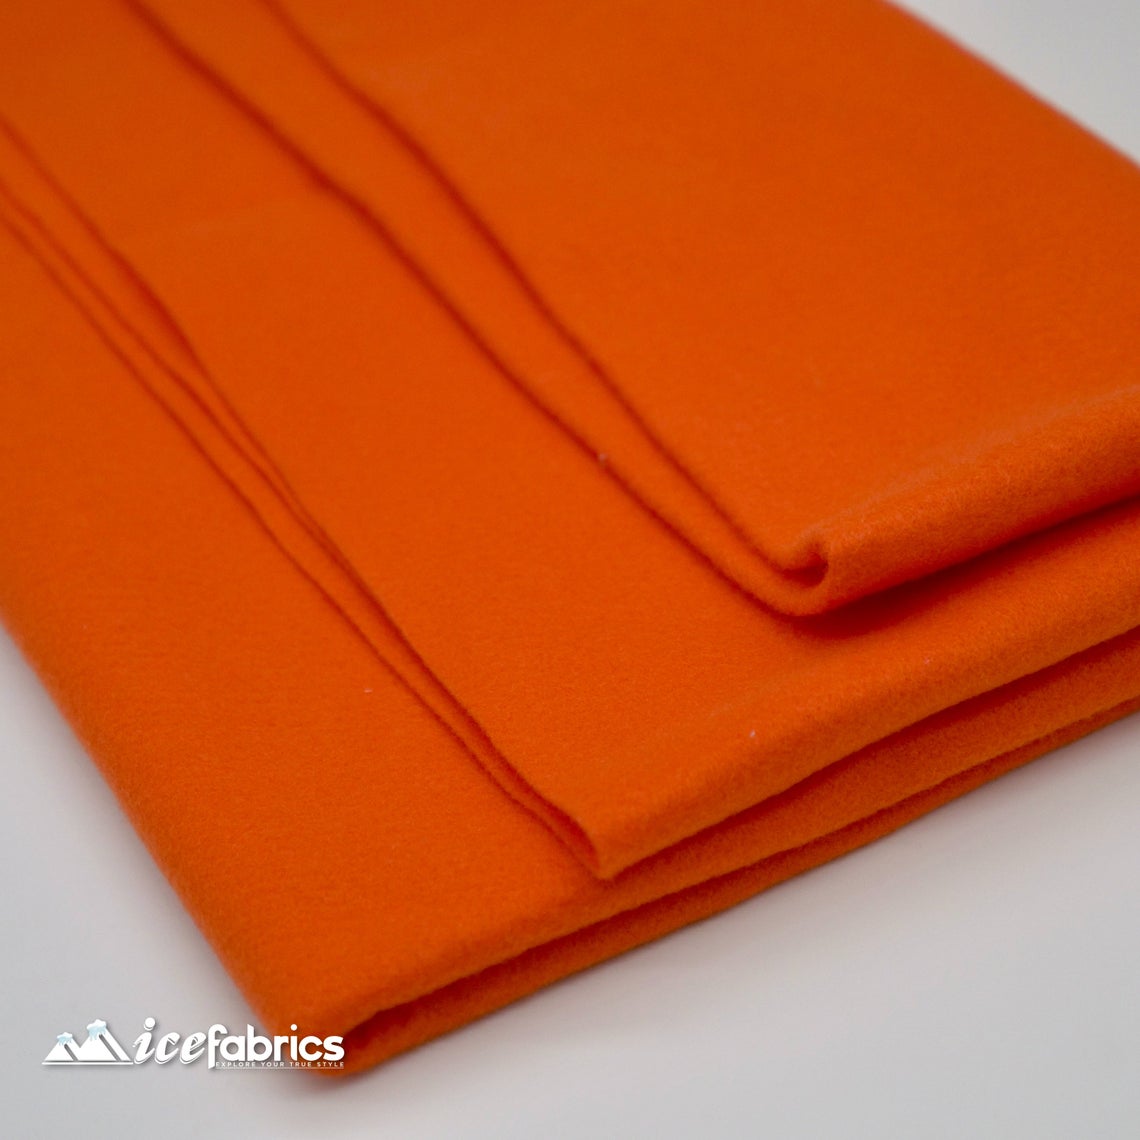 72" Wide 1.6 mm Thick Acrylic Orange Felt Fabric By The YardICE FABRICSICE FABRICSPer Yard1.6mm Thick72" Wide 1.6 mm Thick Acrylic Orange Felt Fabric By The Yard ICE FABRICS